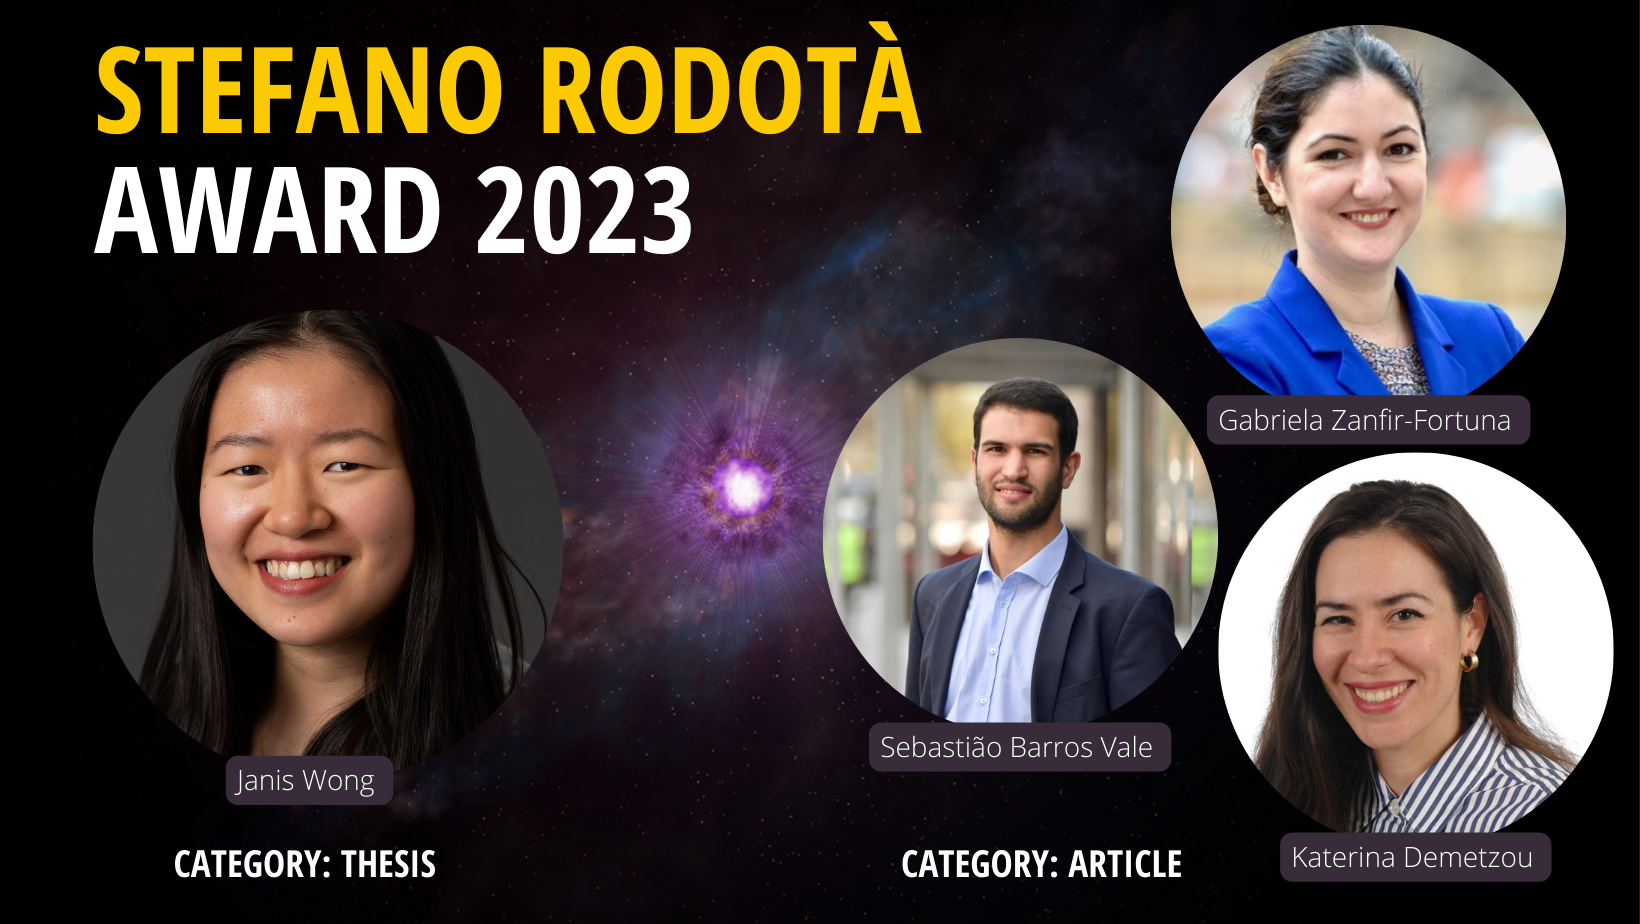 Congratulations to the winners of Stefano Rodotà Data Protection Award 2023